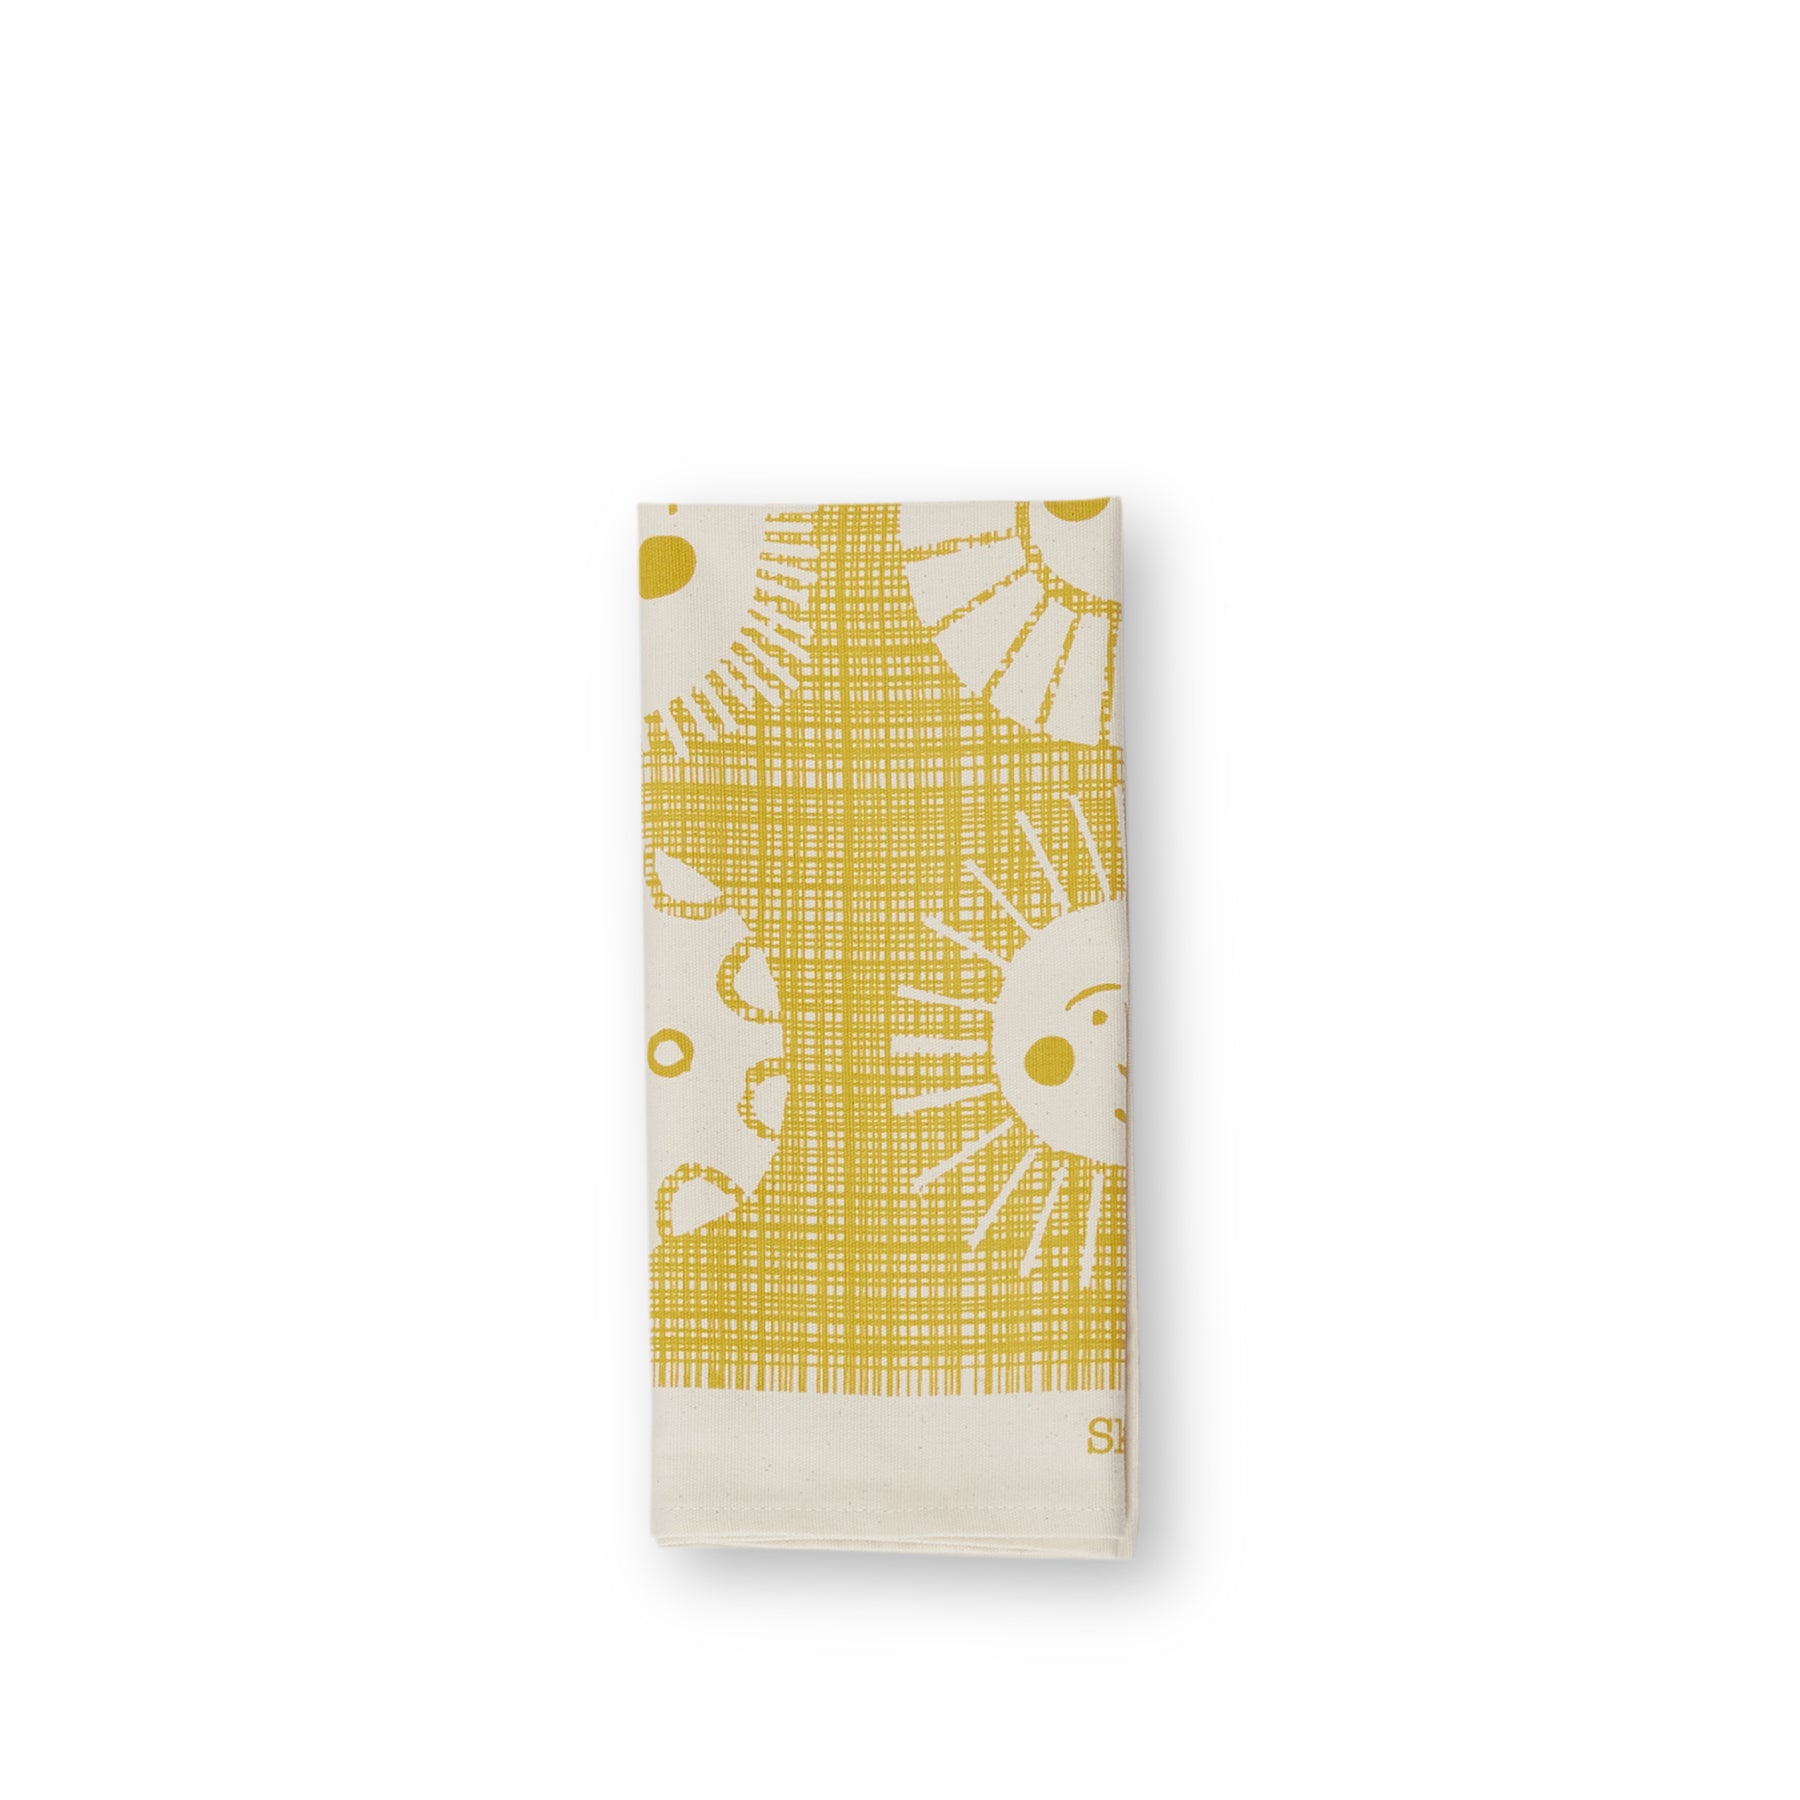 Sunnyside Tea Towel in Gold Zoom Image 1